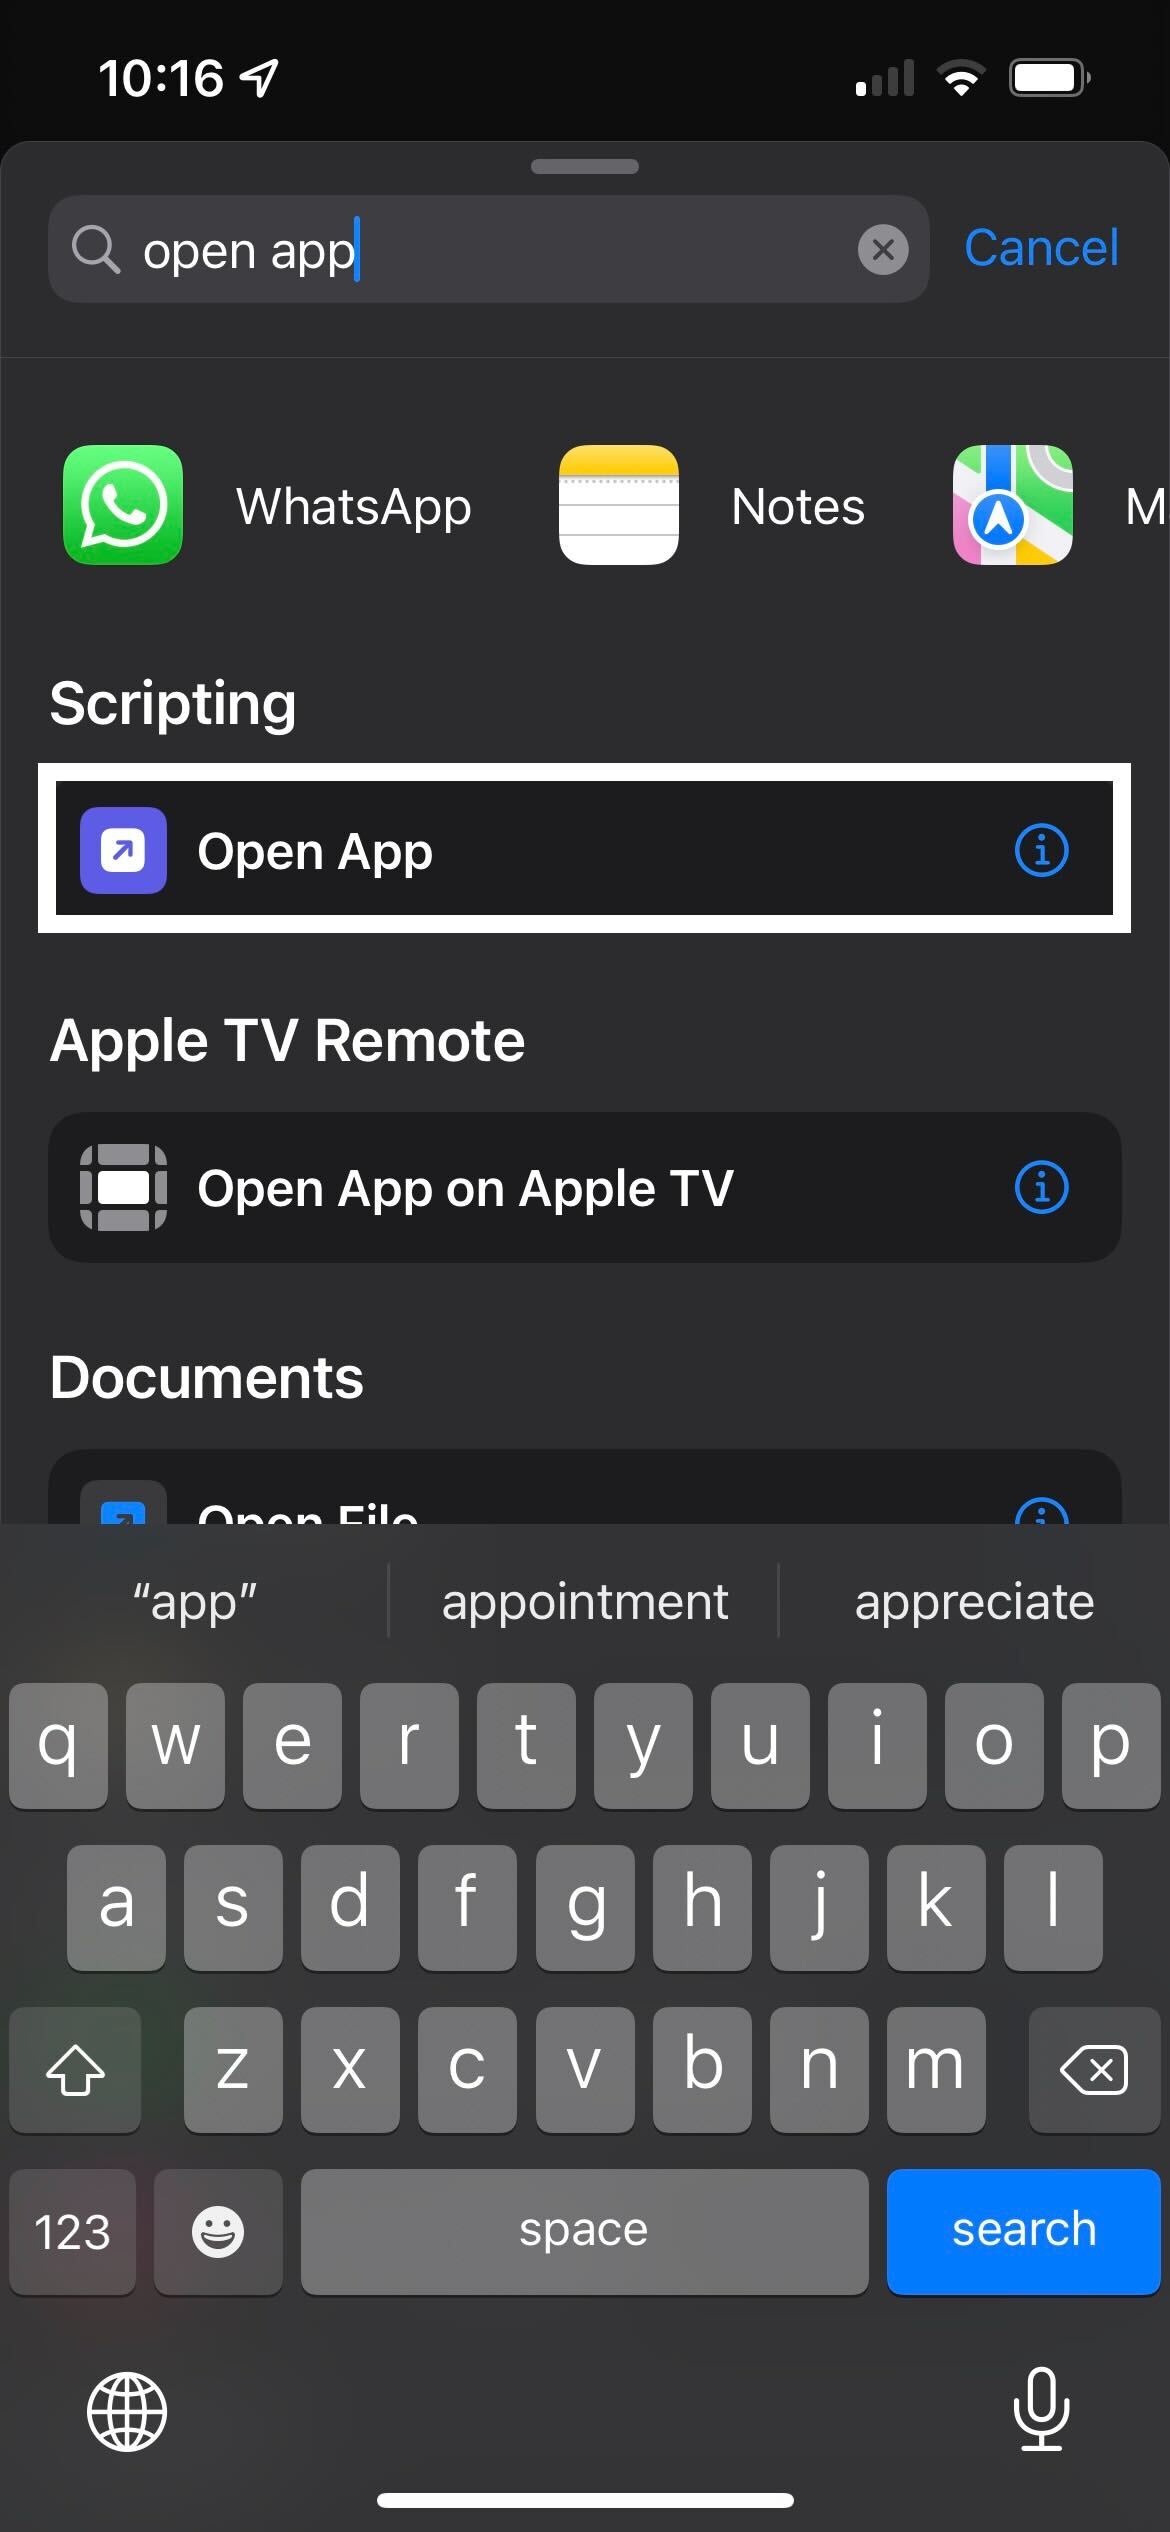 The Open App button on iOS